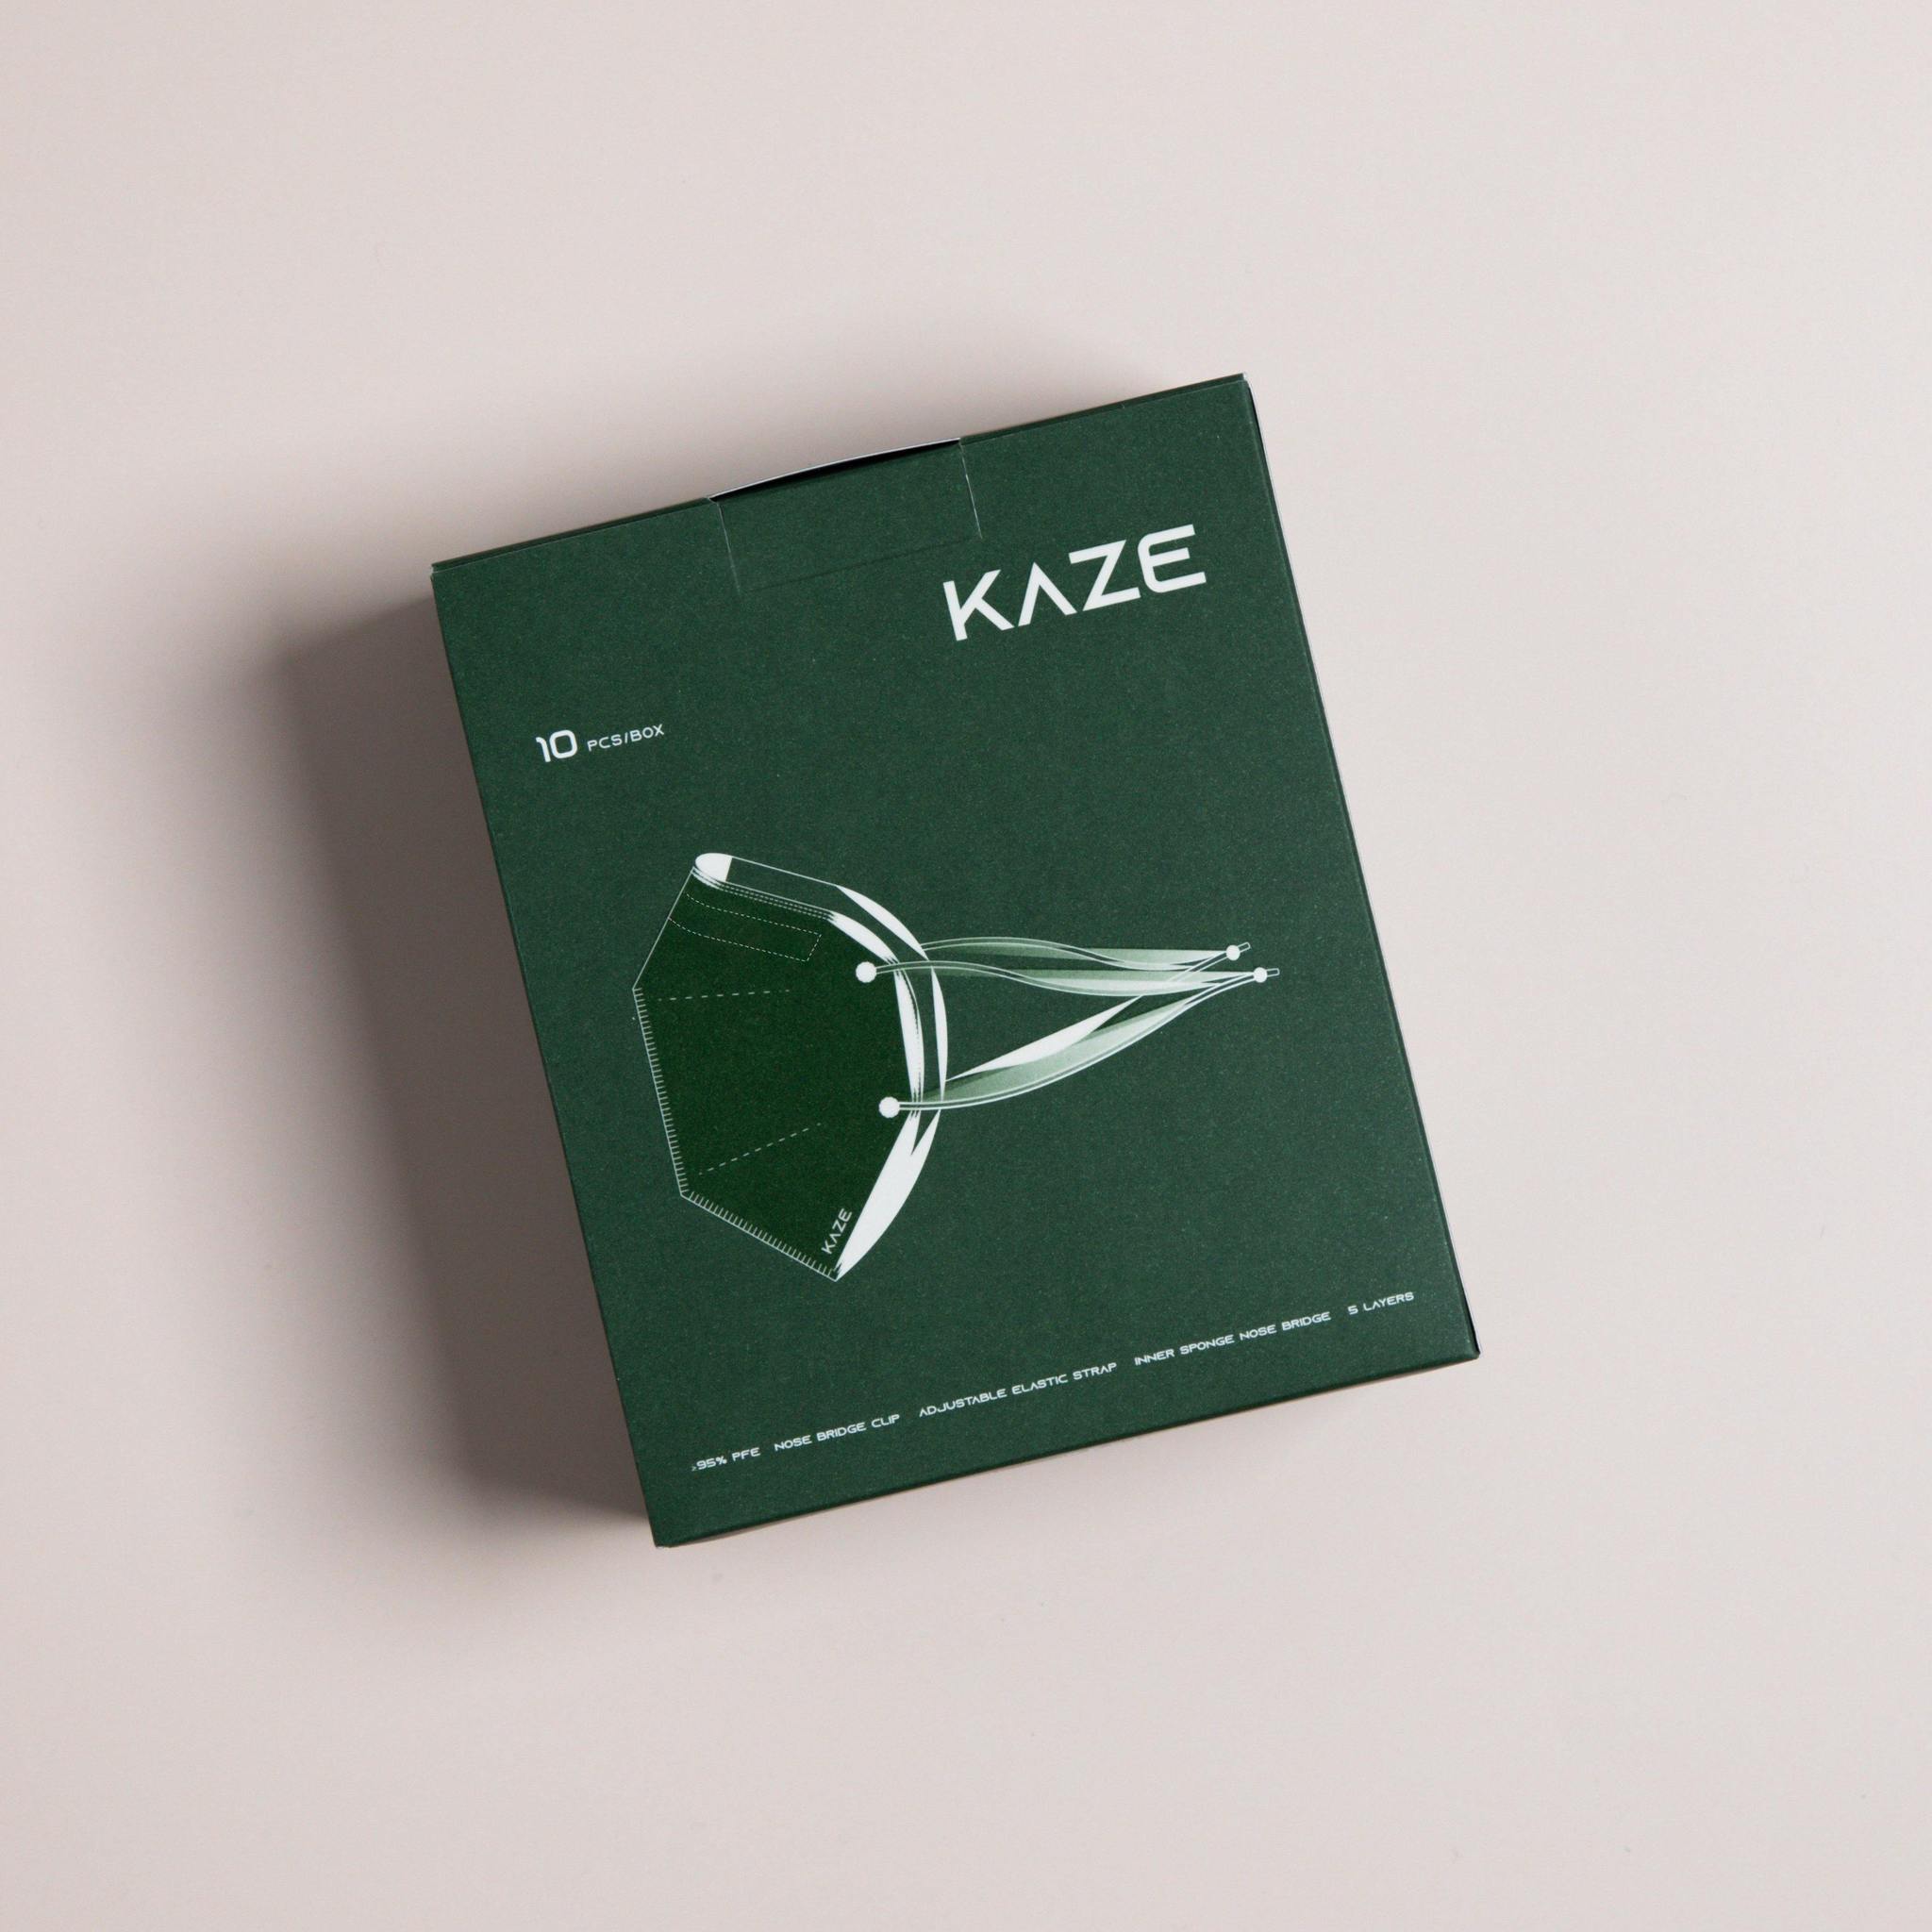 KAZE Masks - Individual Series - Forest Pine